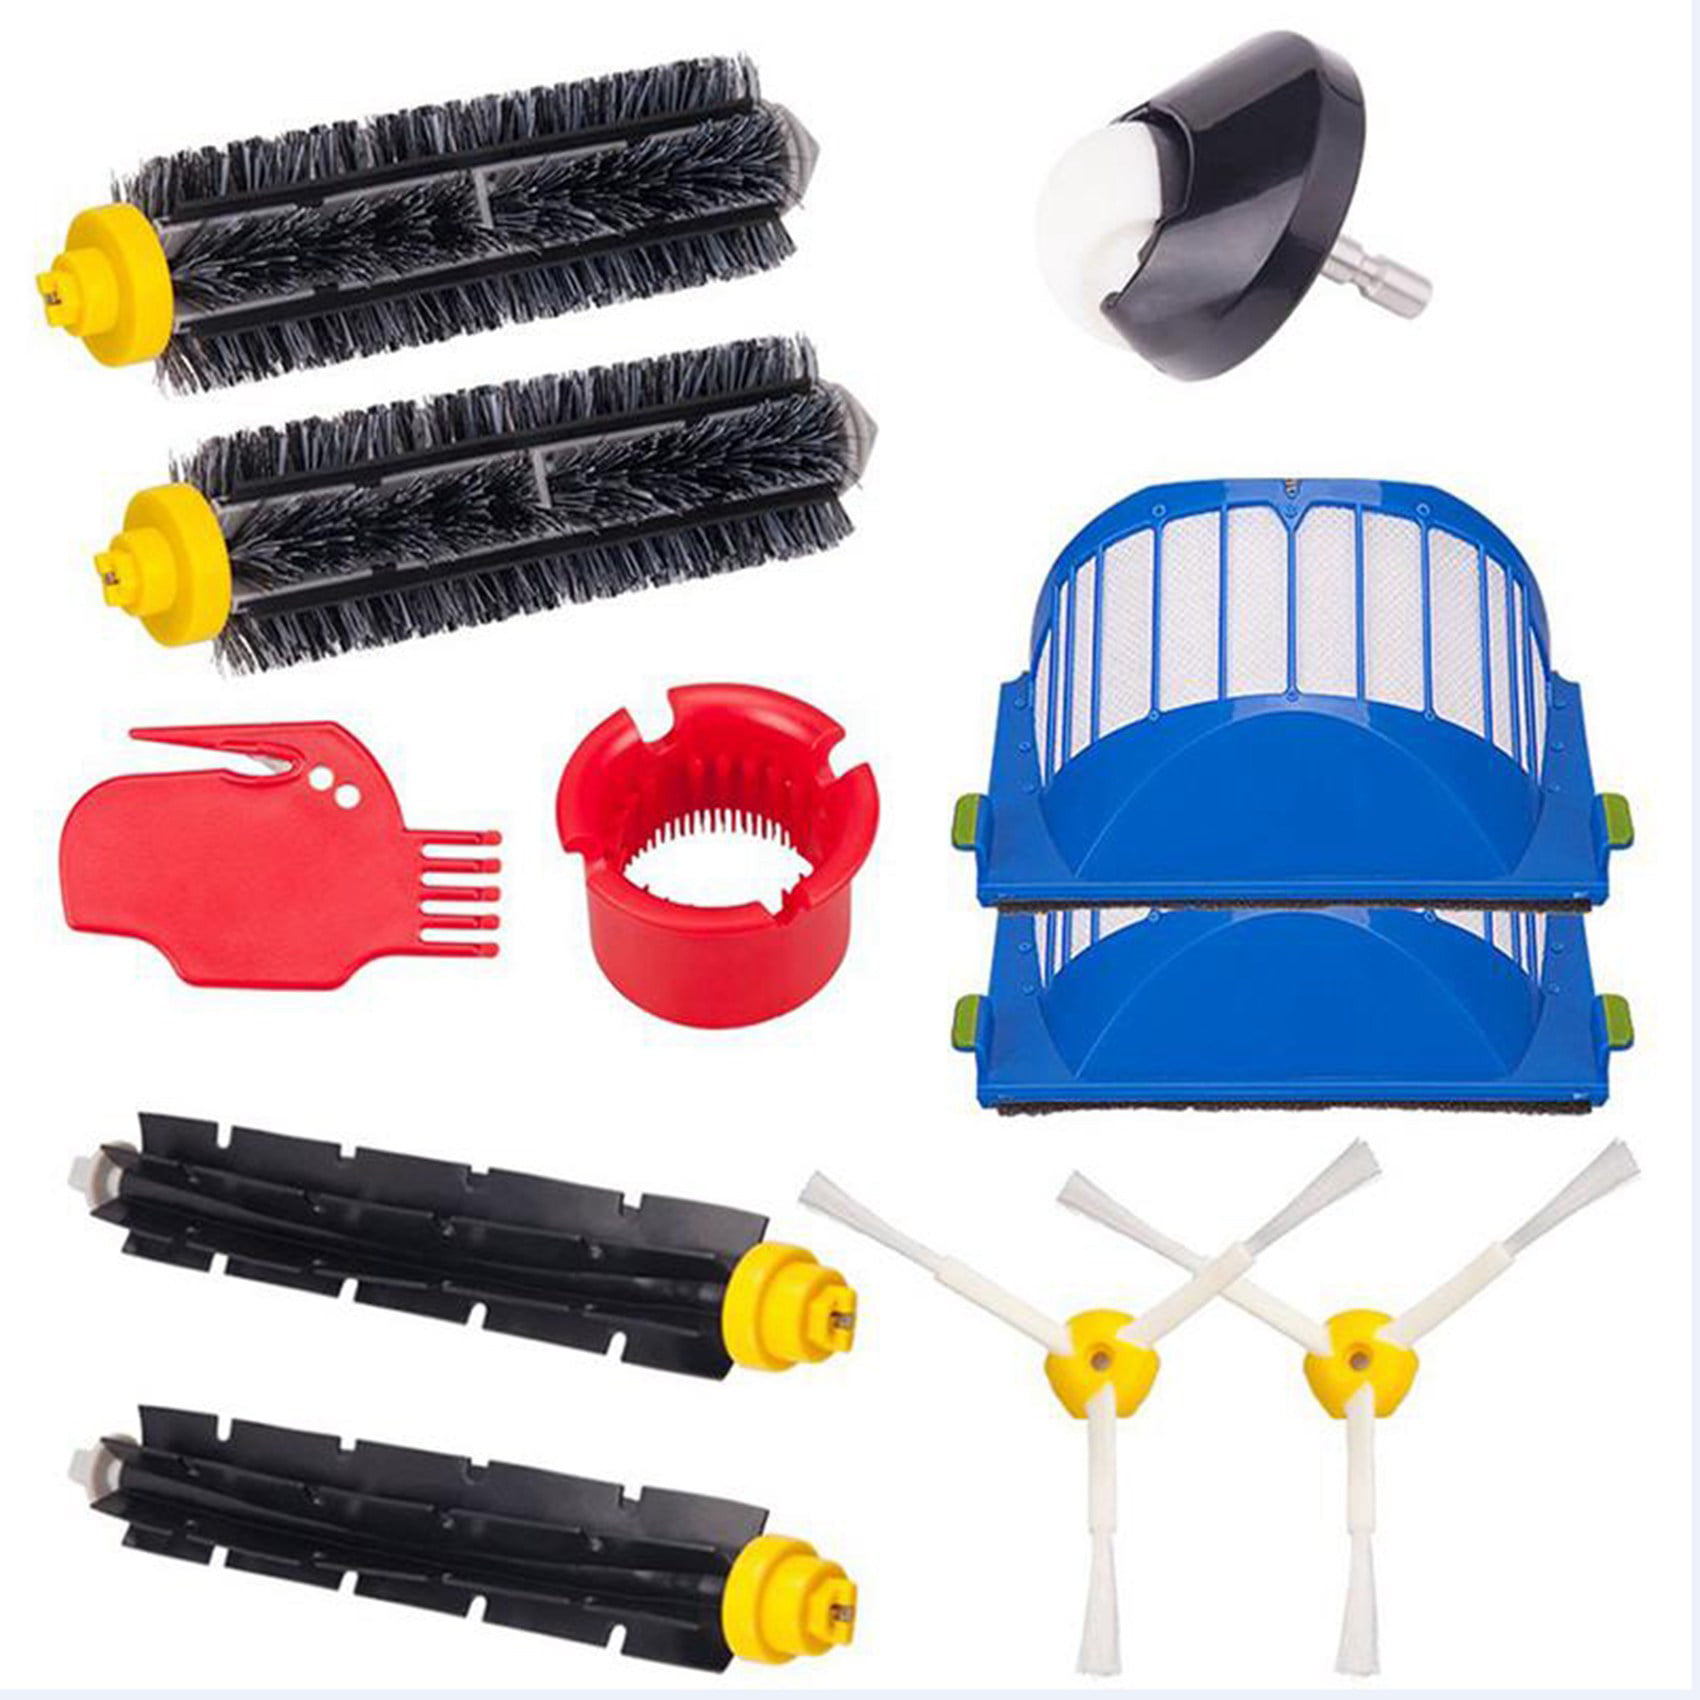 Filter Brushes Part Kit For iRobot Roomba 500-600 Serie Robotic Vacuum Cleaner 